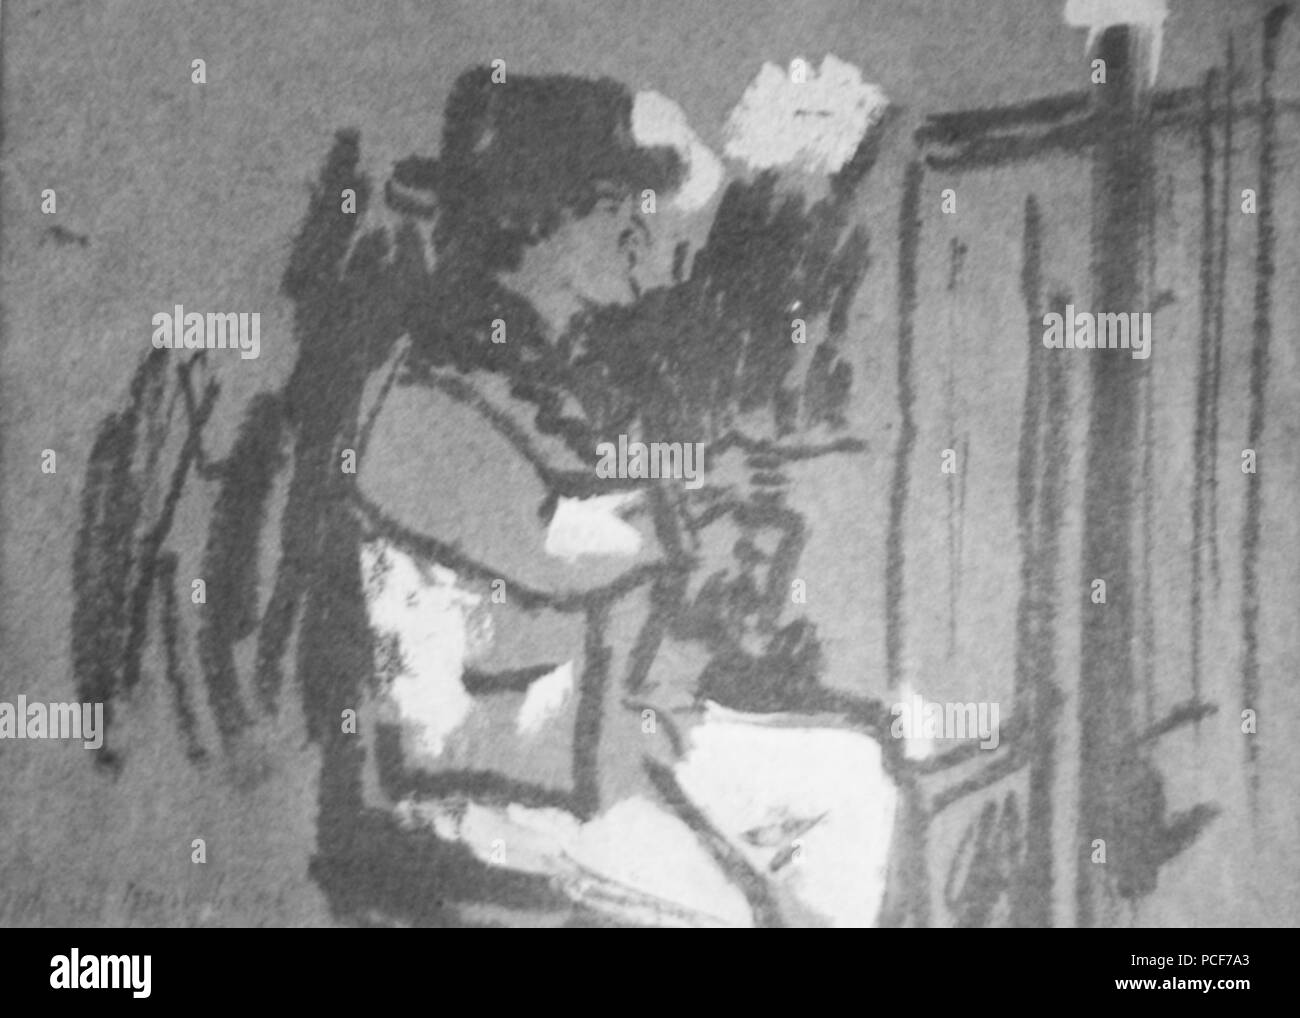 42 Amedeo-Modigliani-painting-by-manuel-humbert Stock Photo